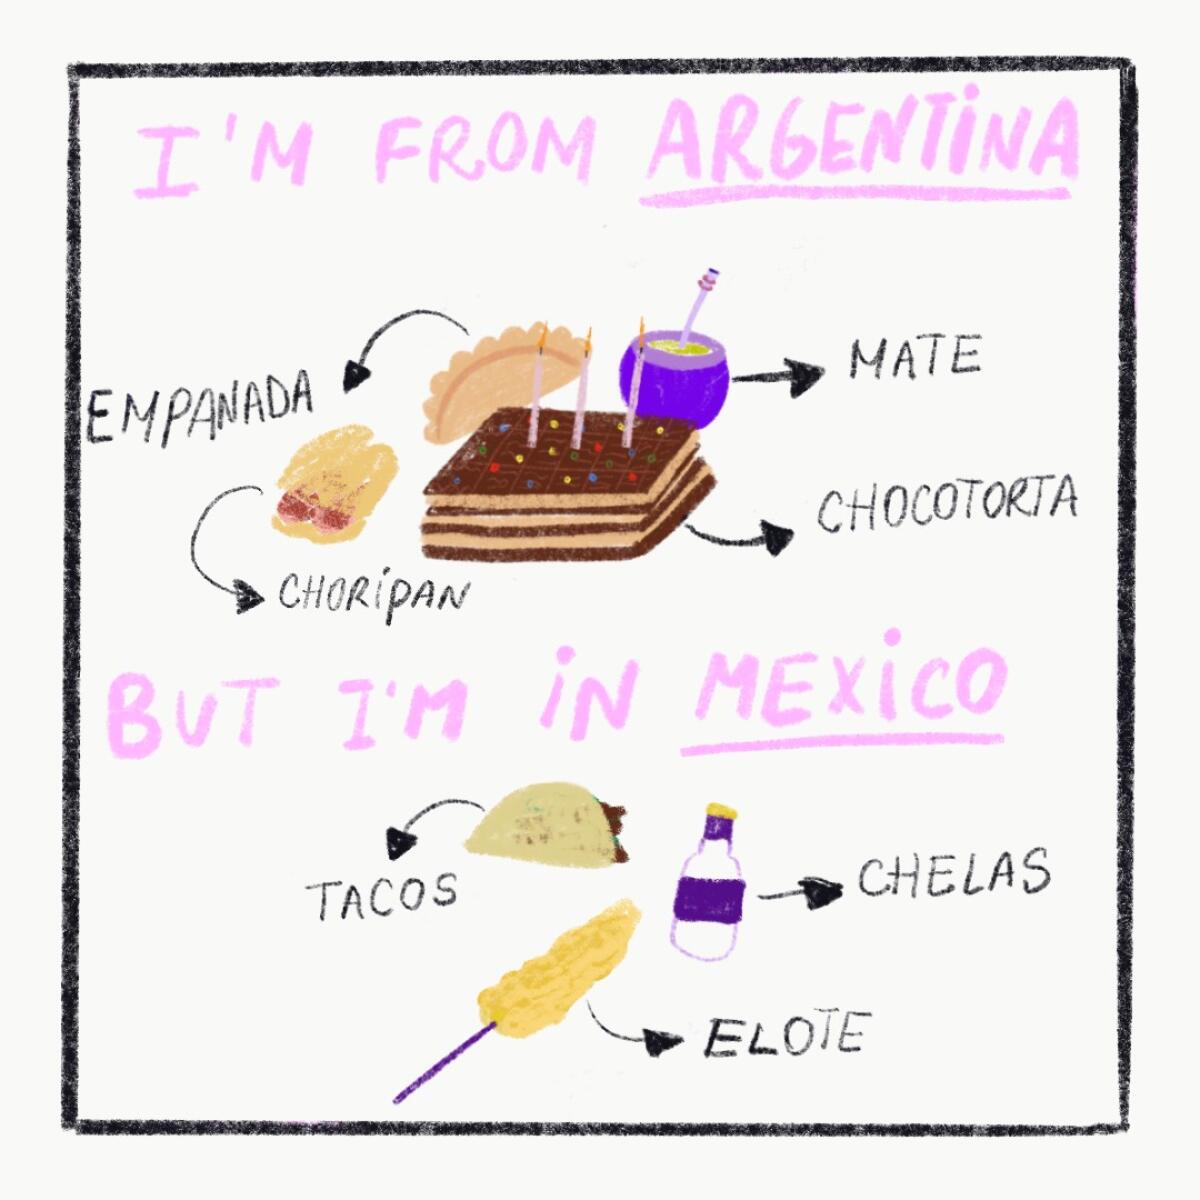 I'm from Argentina, but I'm in Mexico. Empanada, mate, chocotorta, choripan. 